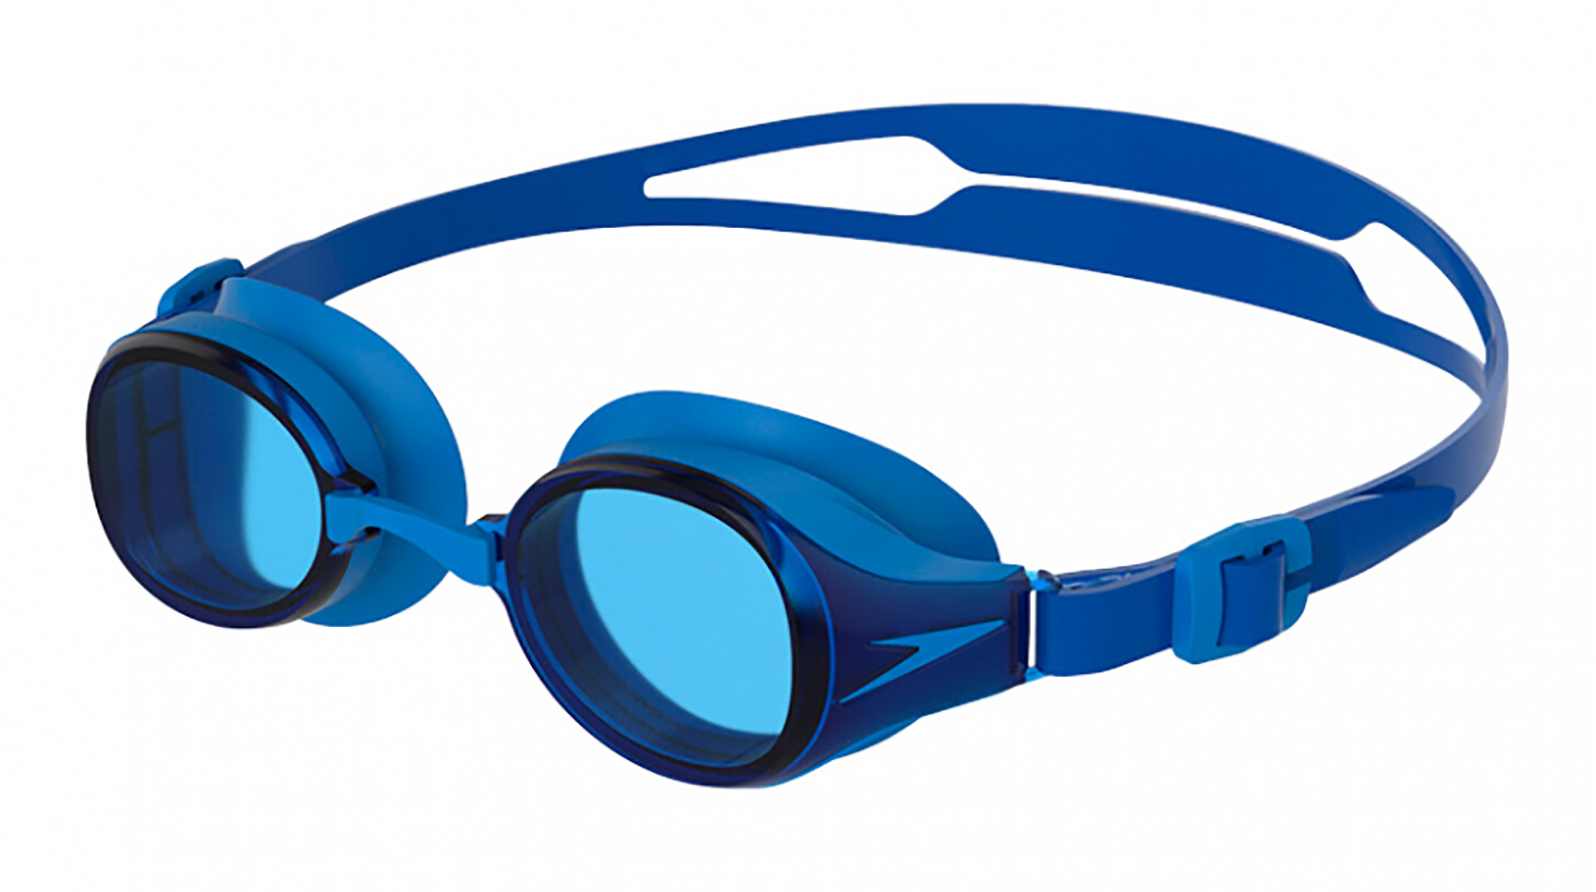 Speedo Очки для плавания Hydropure Optical F809 -5.5 speedo очки для плавания hydropure optical f809 4 0